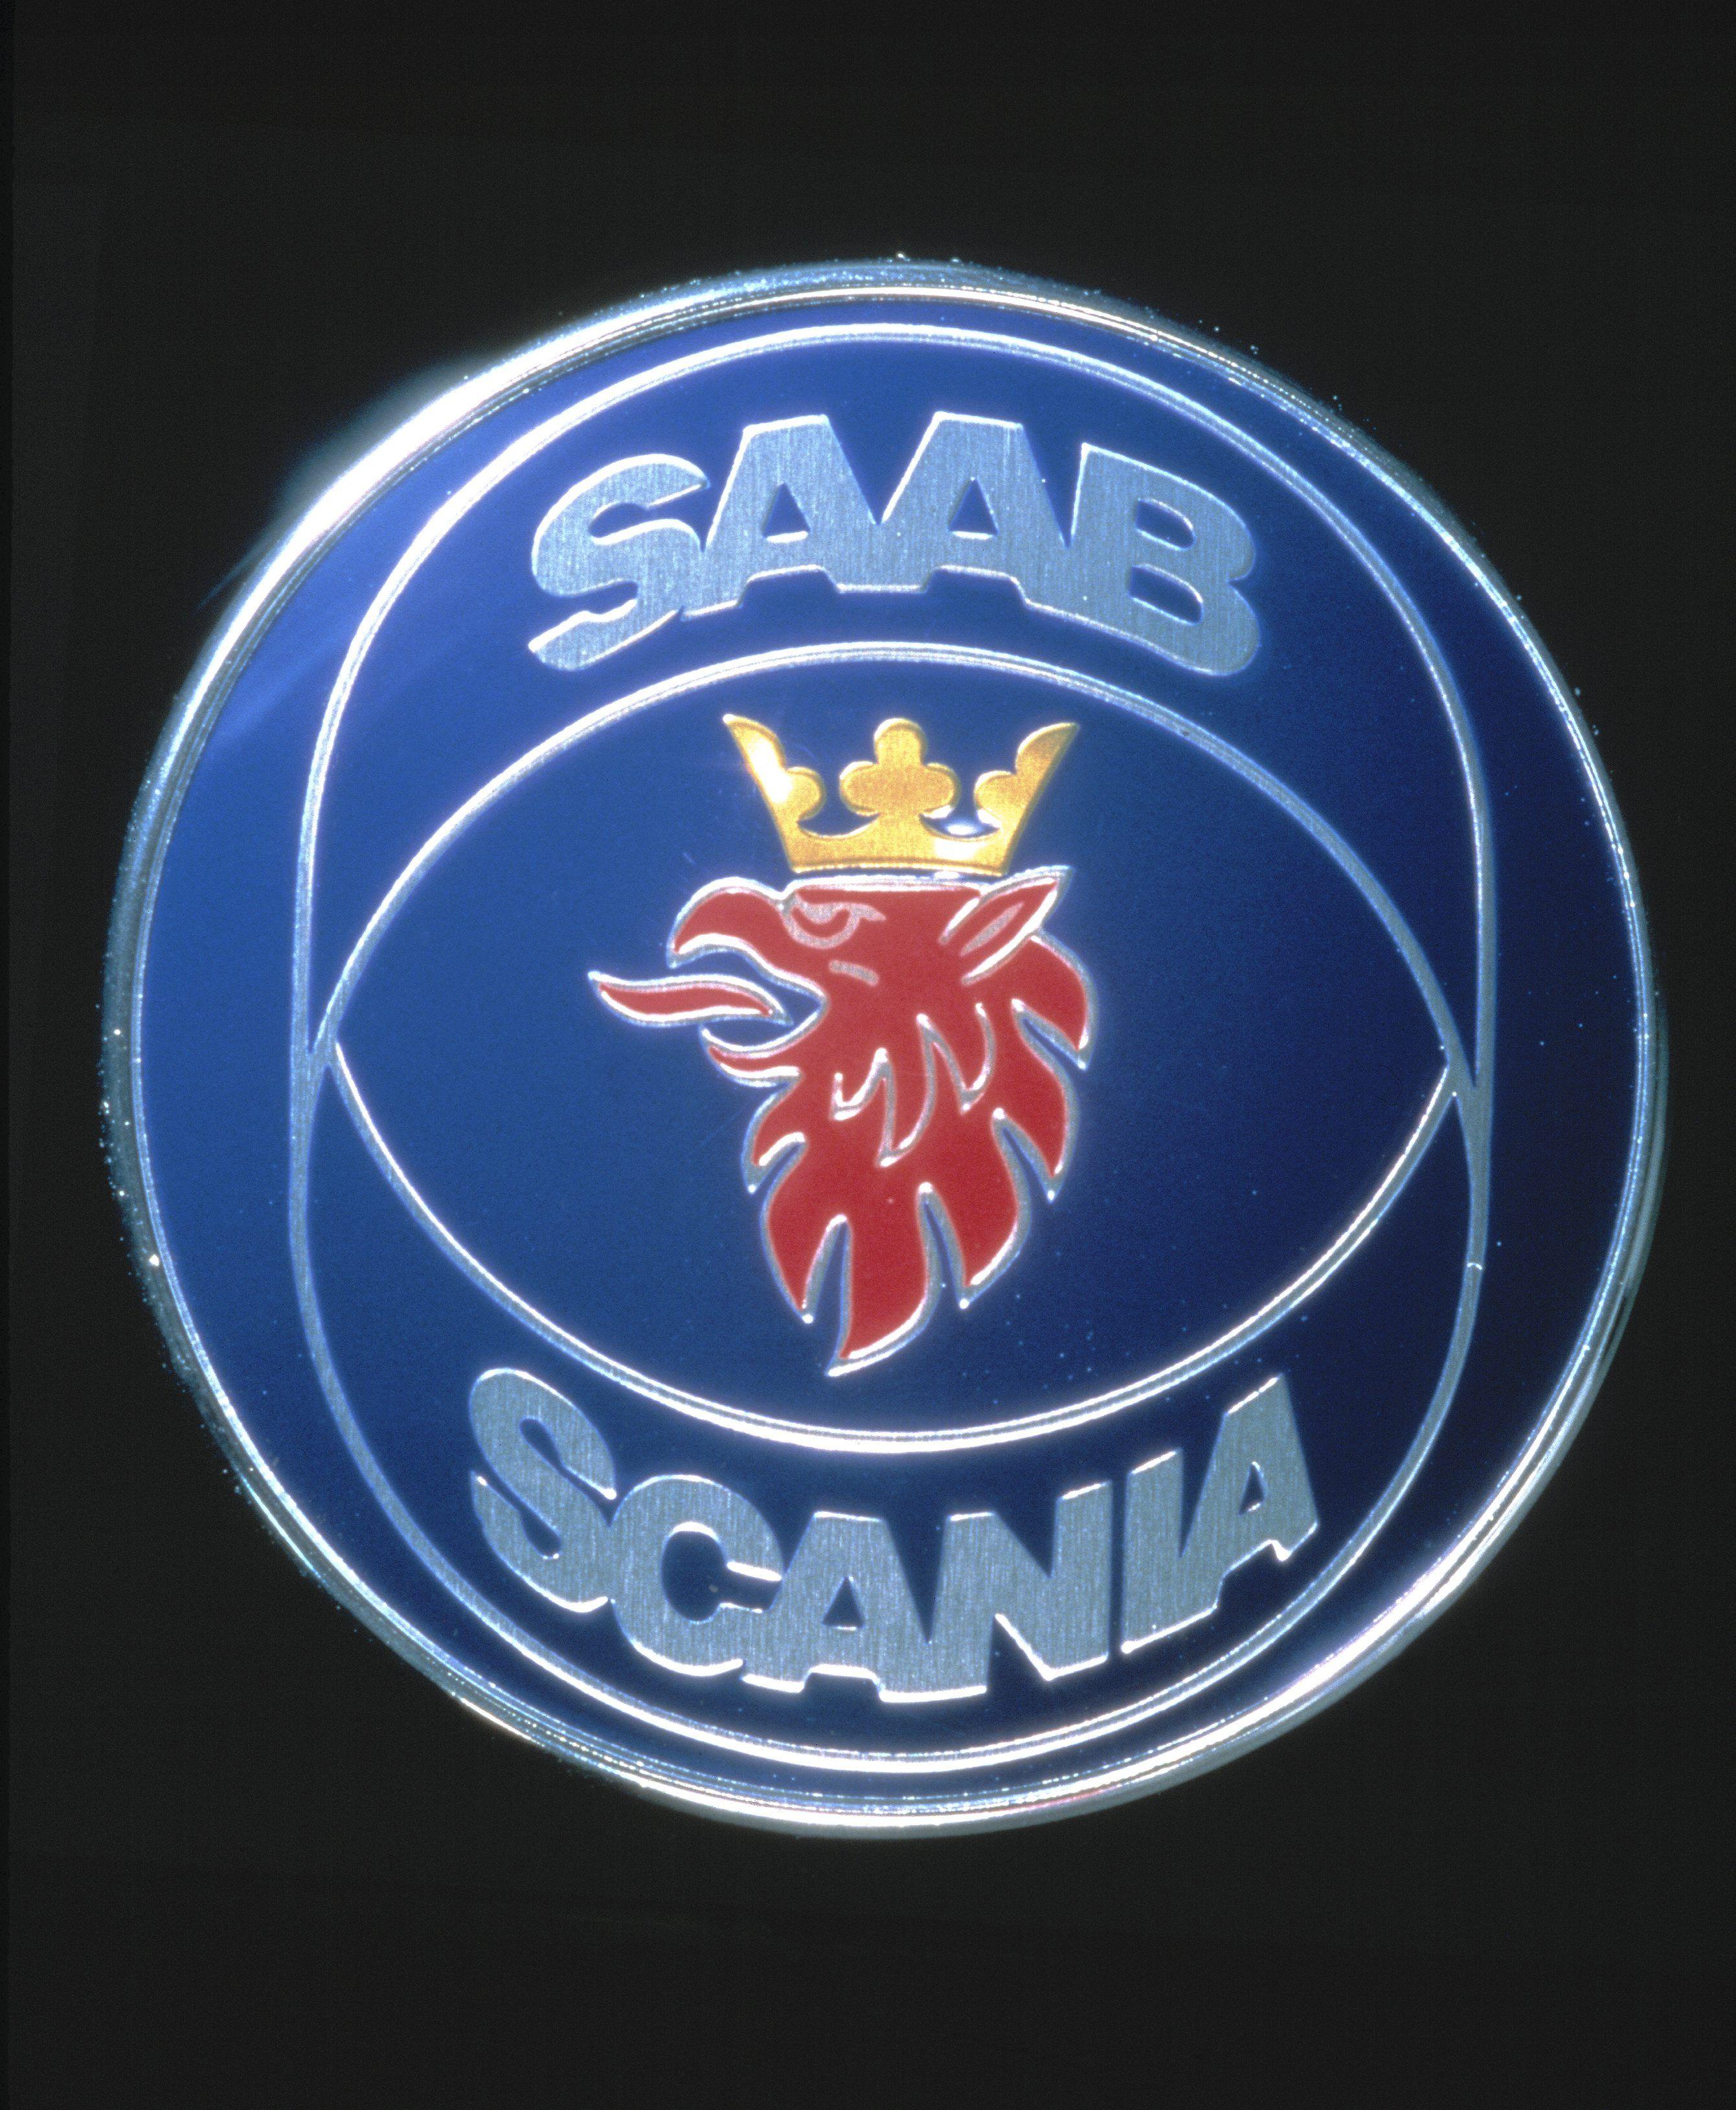 Saab-Scania Logo - Scania watches over its trademark